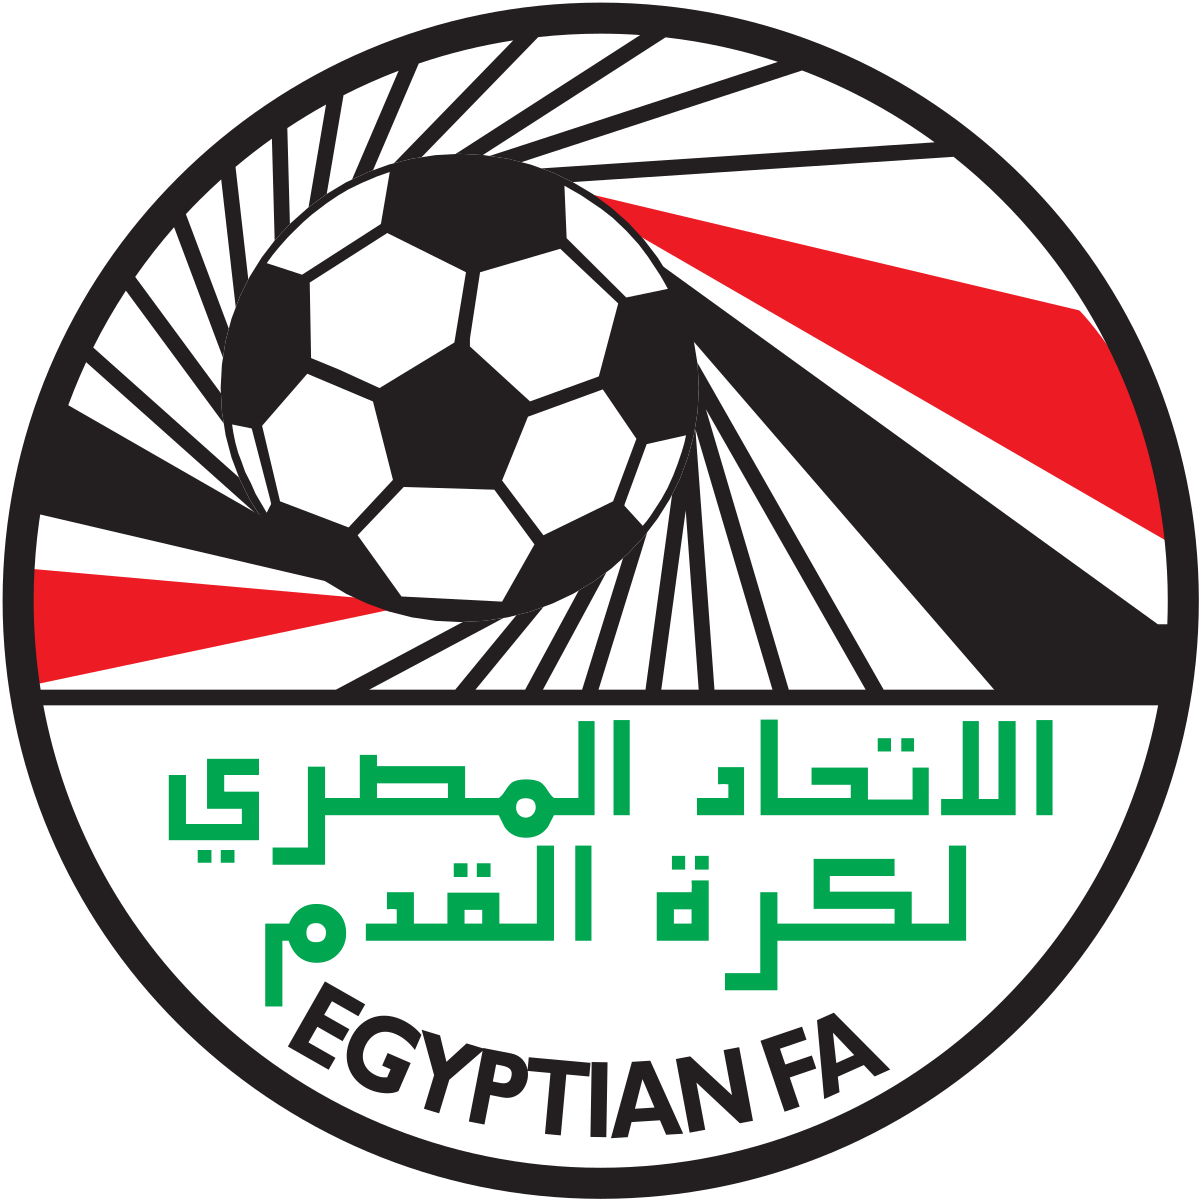 Egypt Logo PNG Image Background